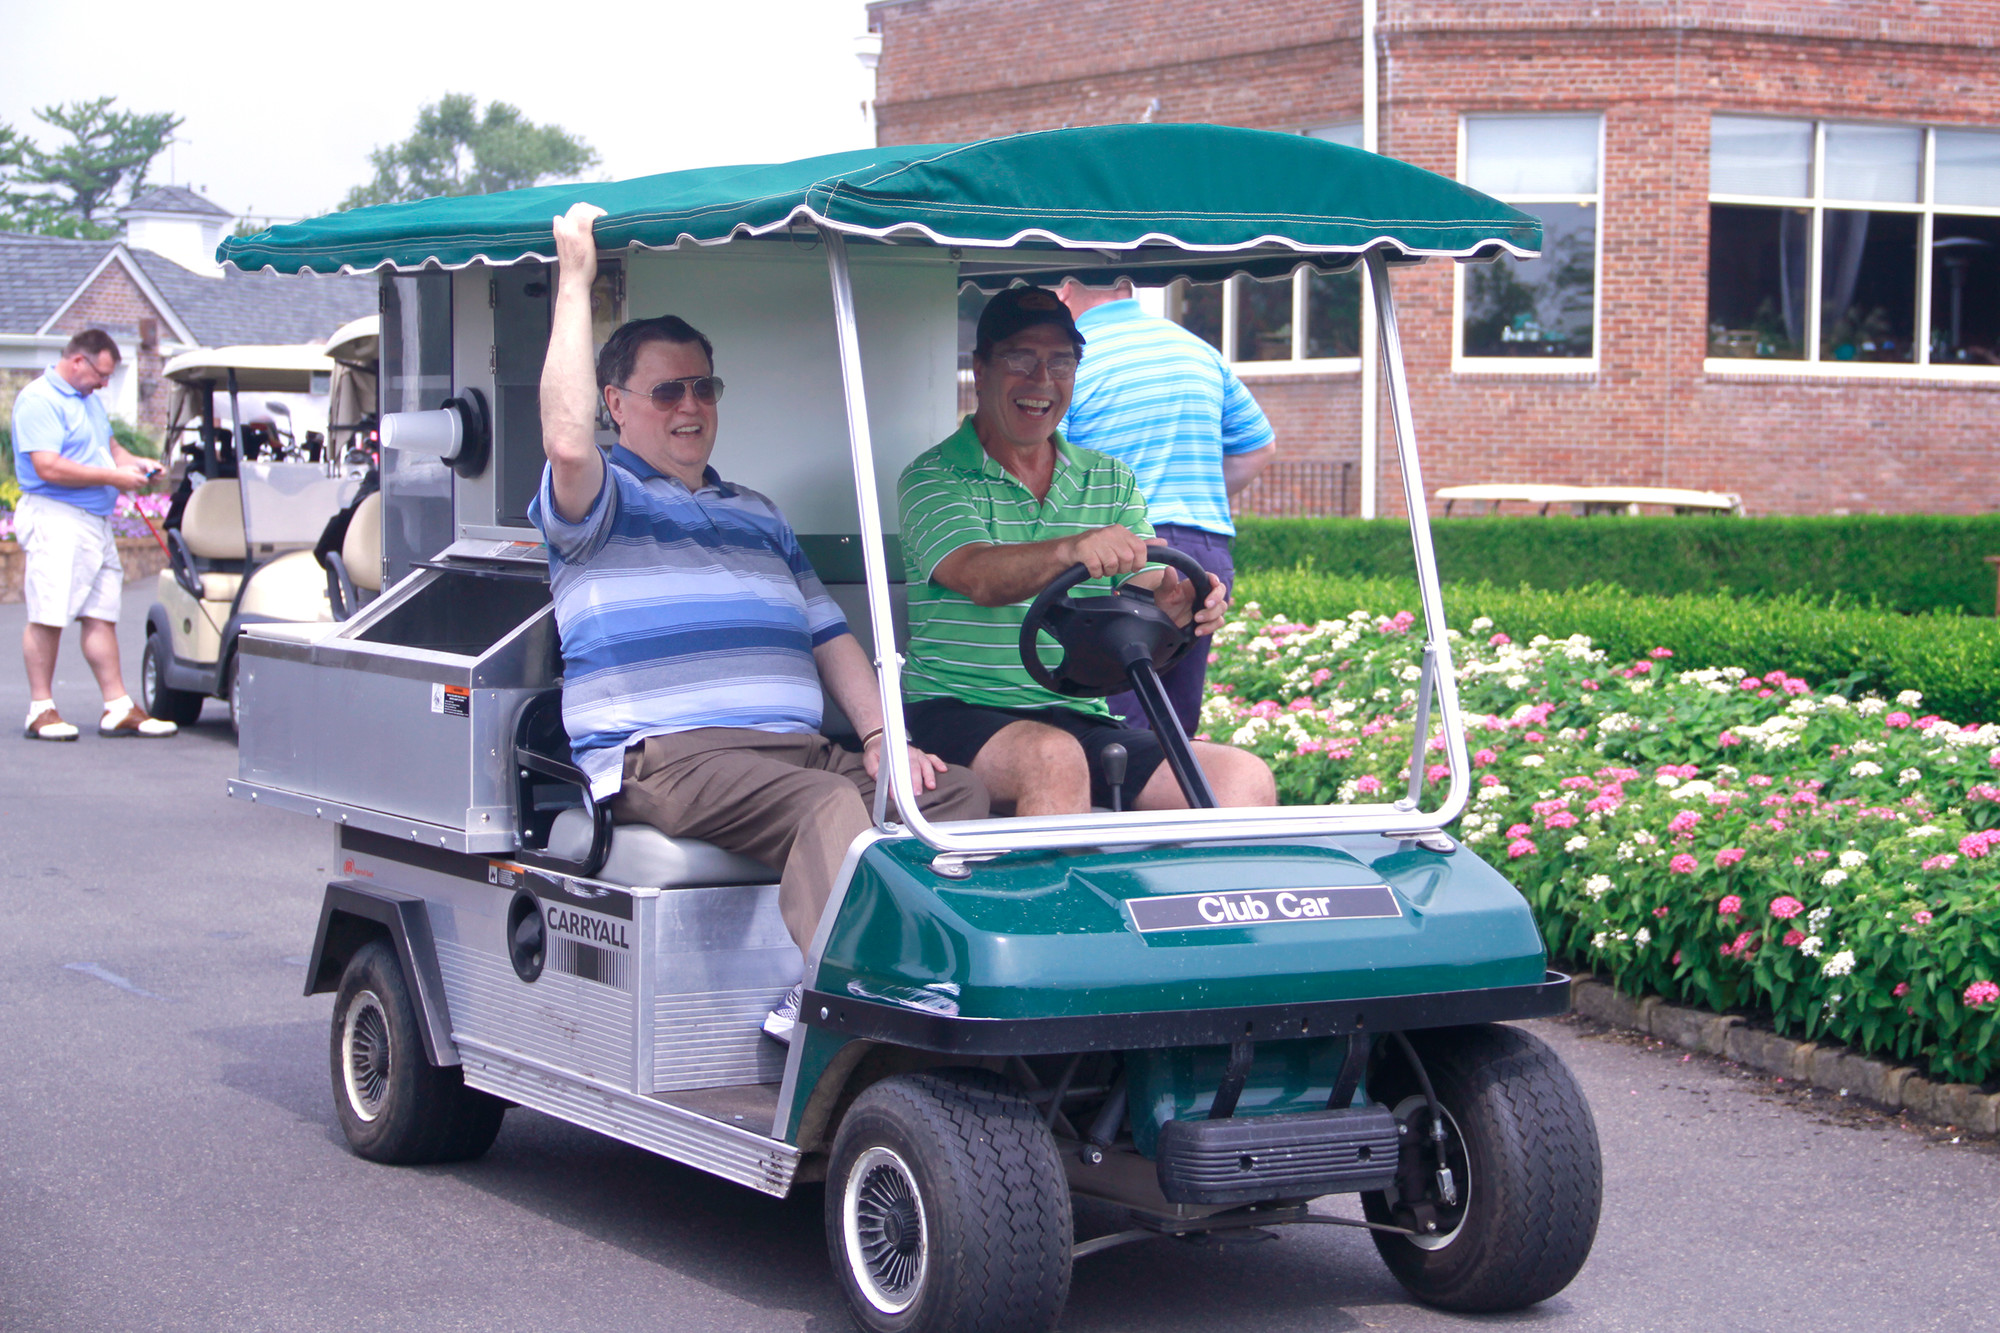 Mayor Hendrick and Deputy Mayor Alan Beach drive the beverage cart.